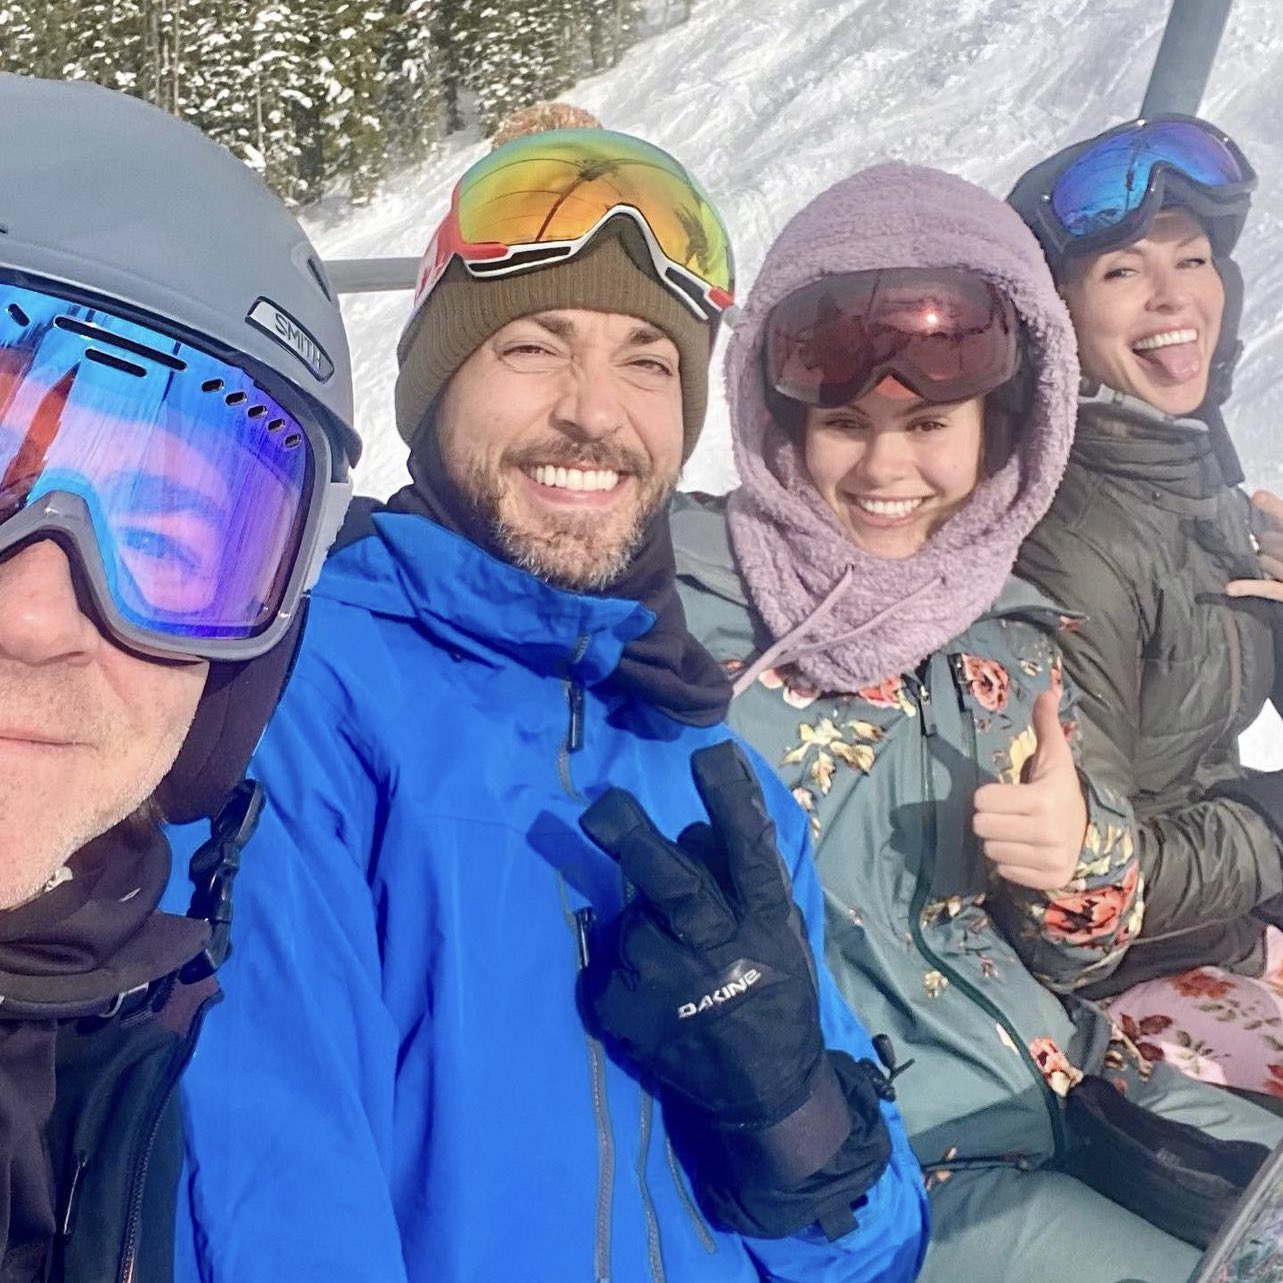 Shazam! Star Zachary Levi Aims For Job Security With Skiing Photos